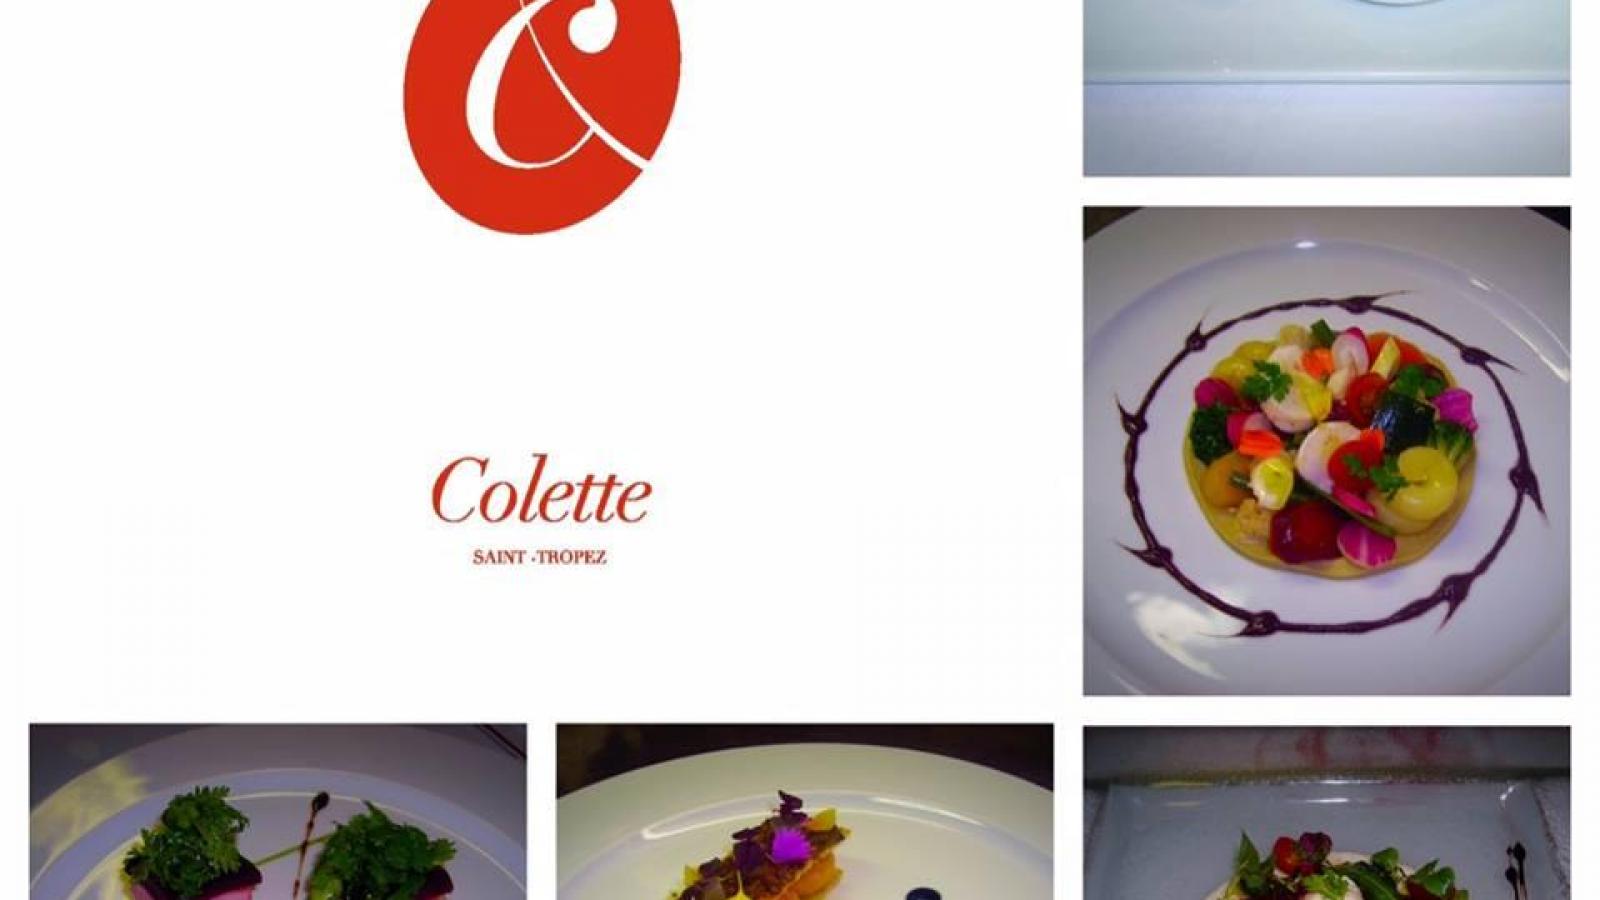 Restaurant Colette, the Chef's new menu